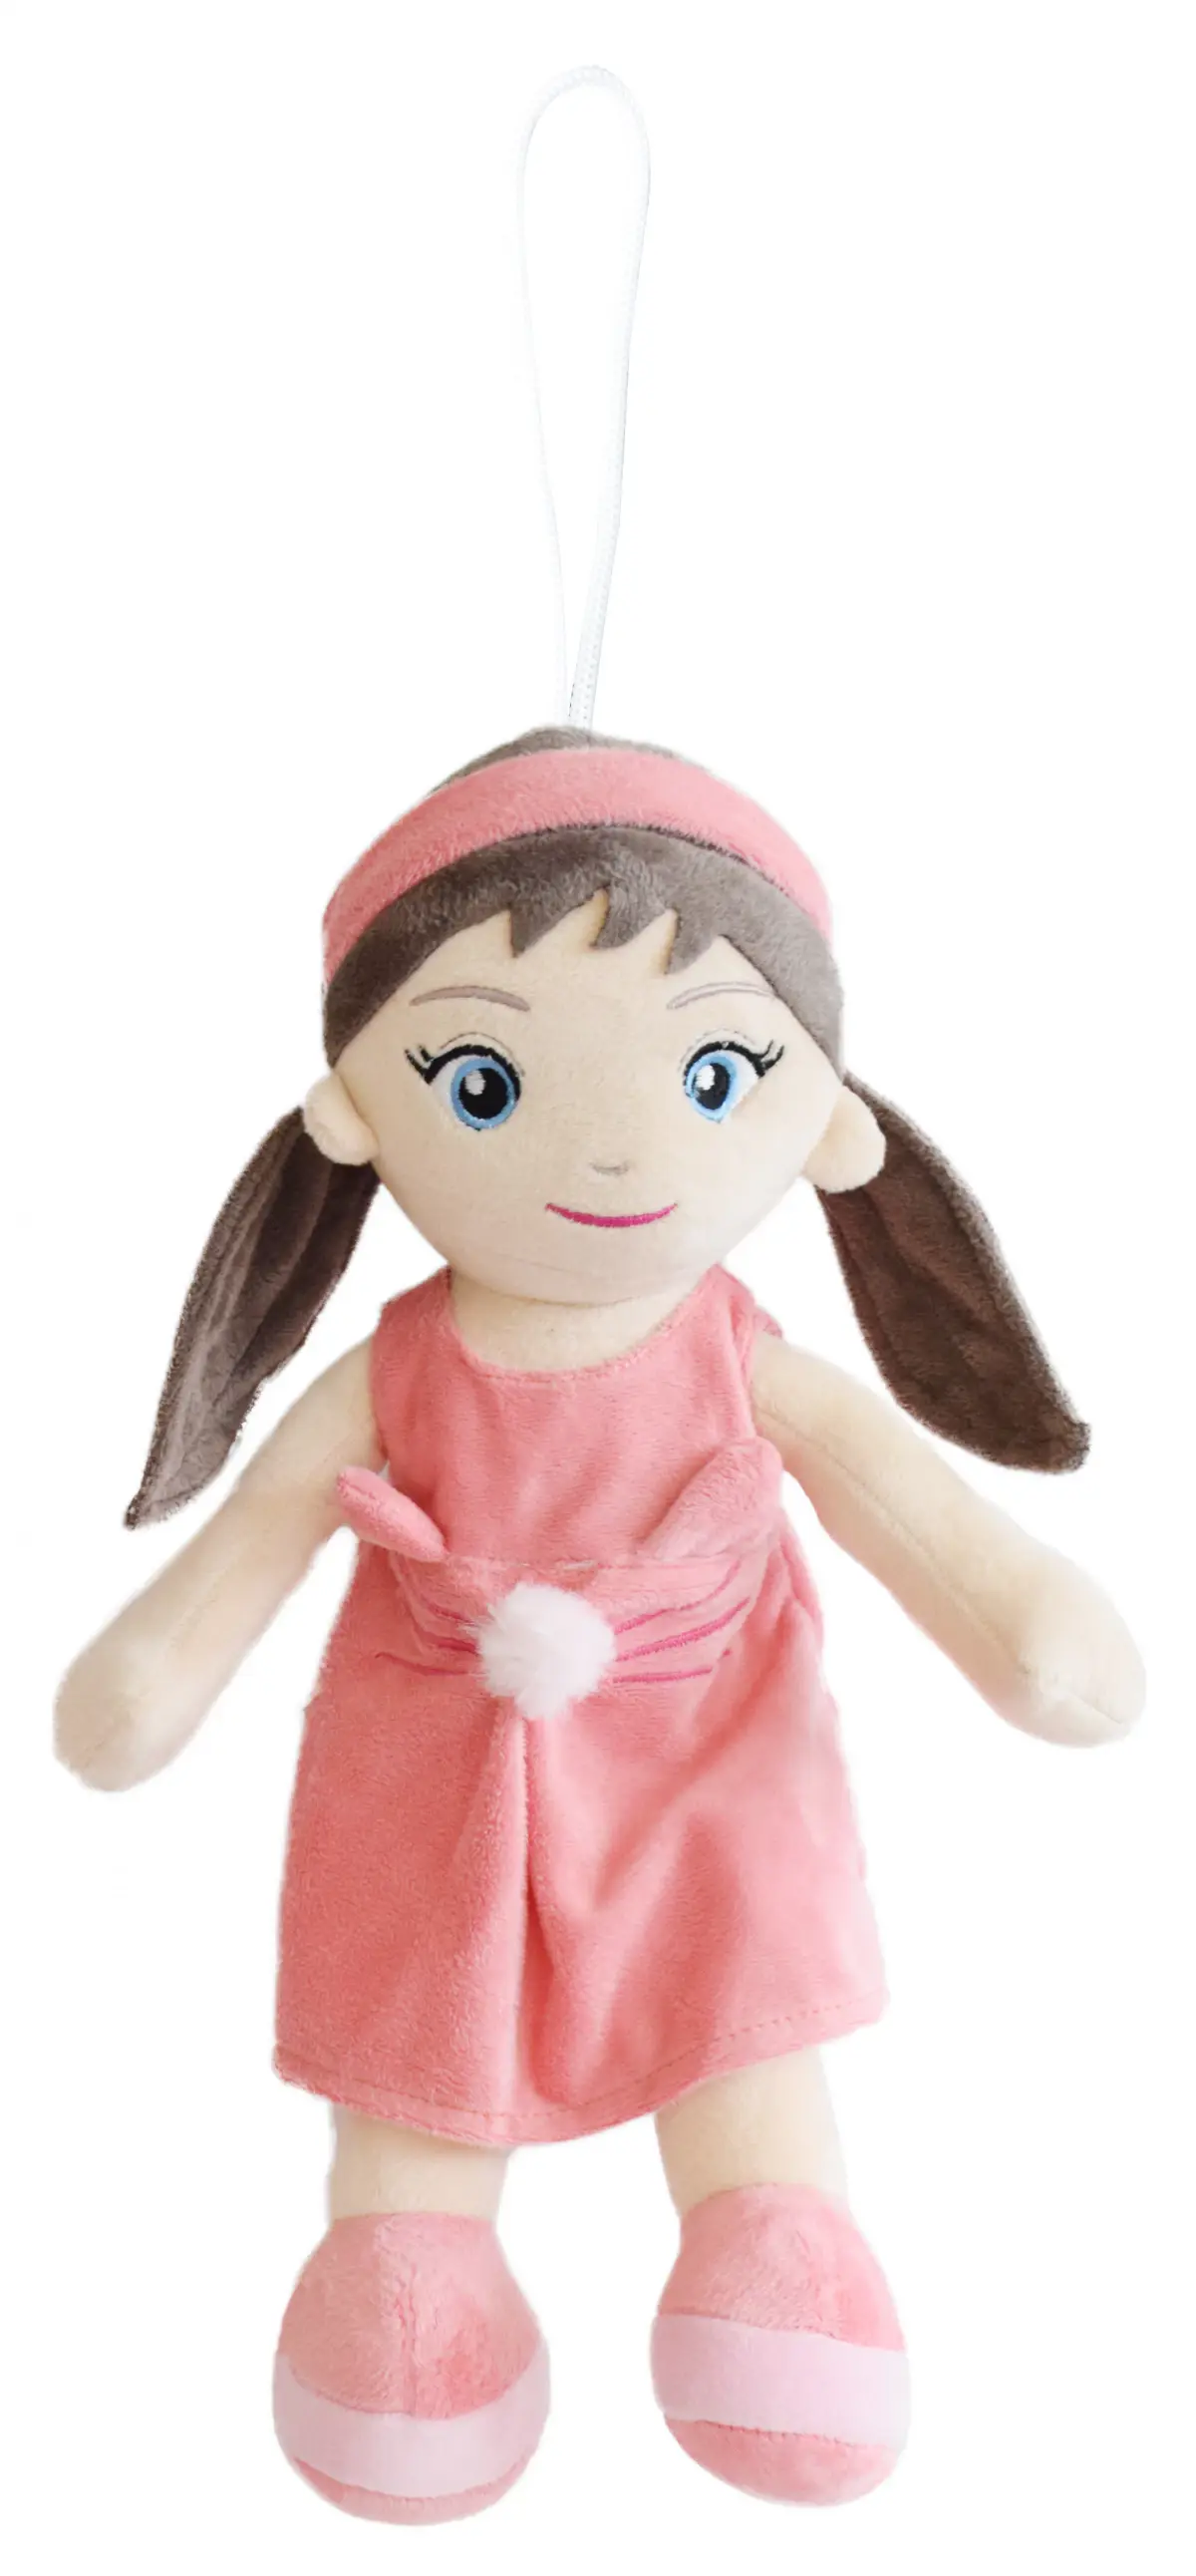 Plush Cute Super Soft Toy Huggable Doll With Pom Pom By Mirada, 38Cm, Coral